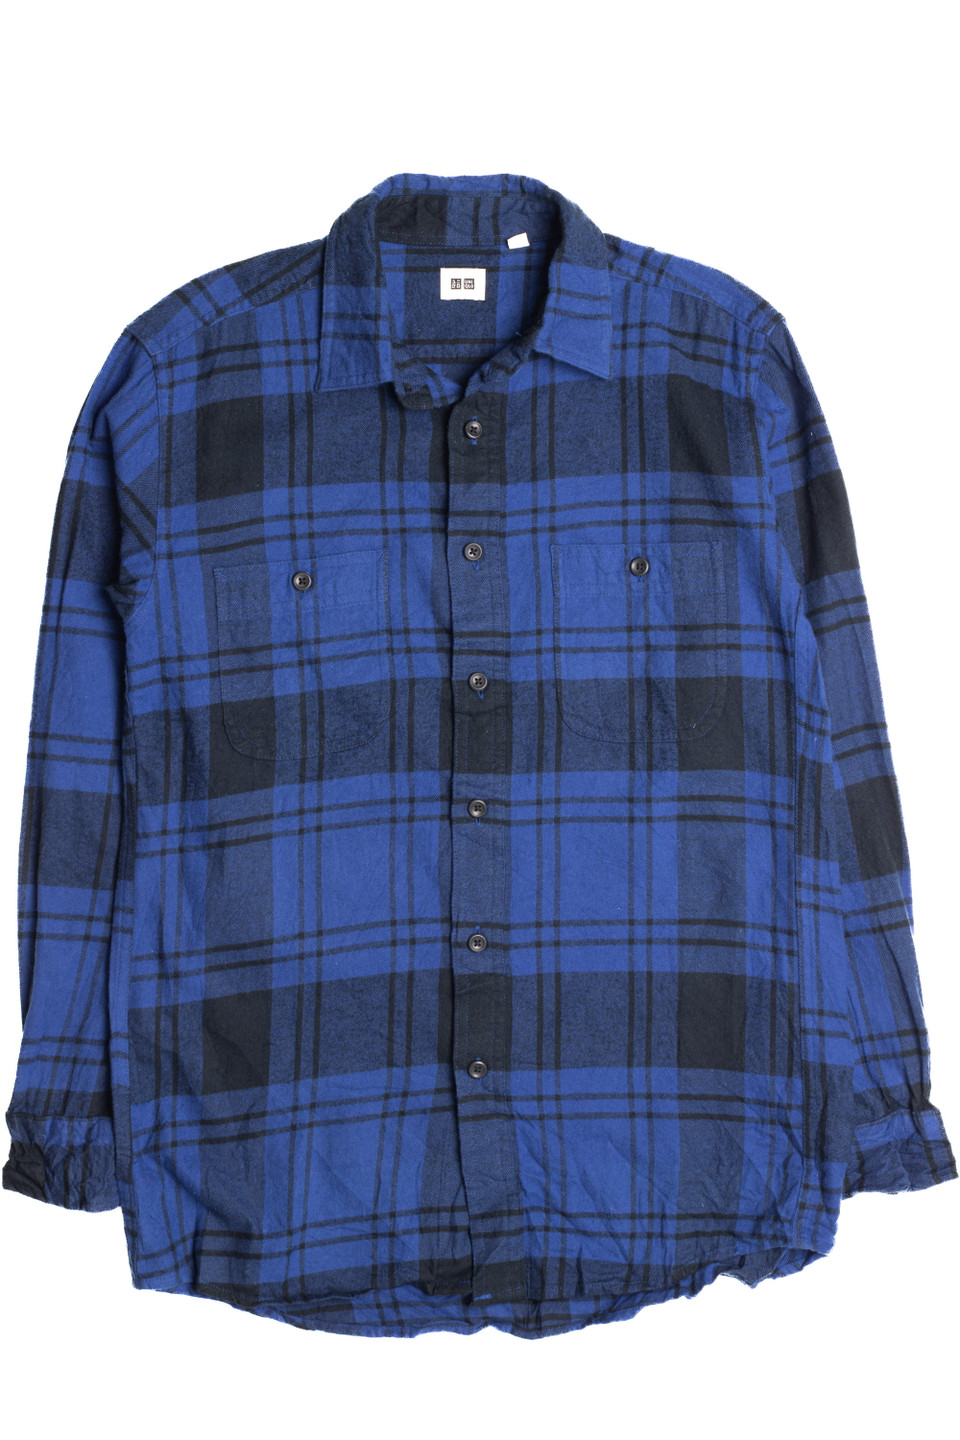 Blue Hawker Rye Flannel Shirt 4336 - Ragstock.com